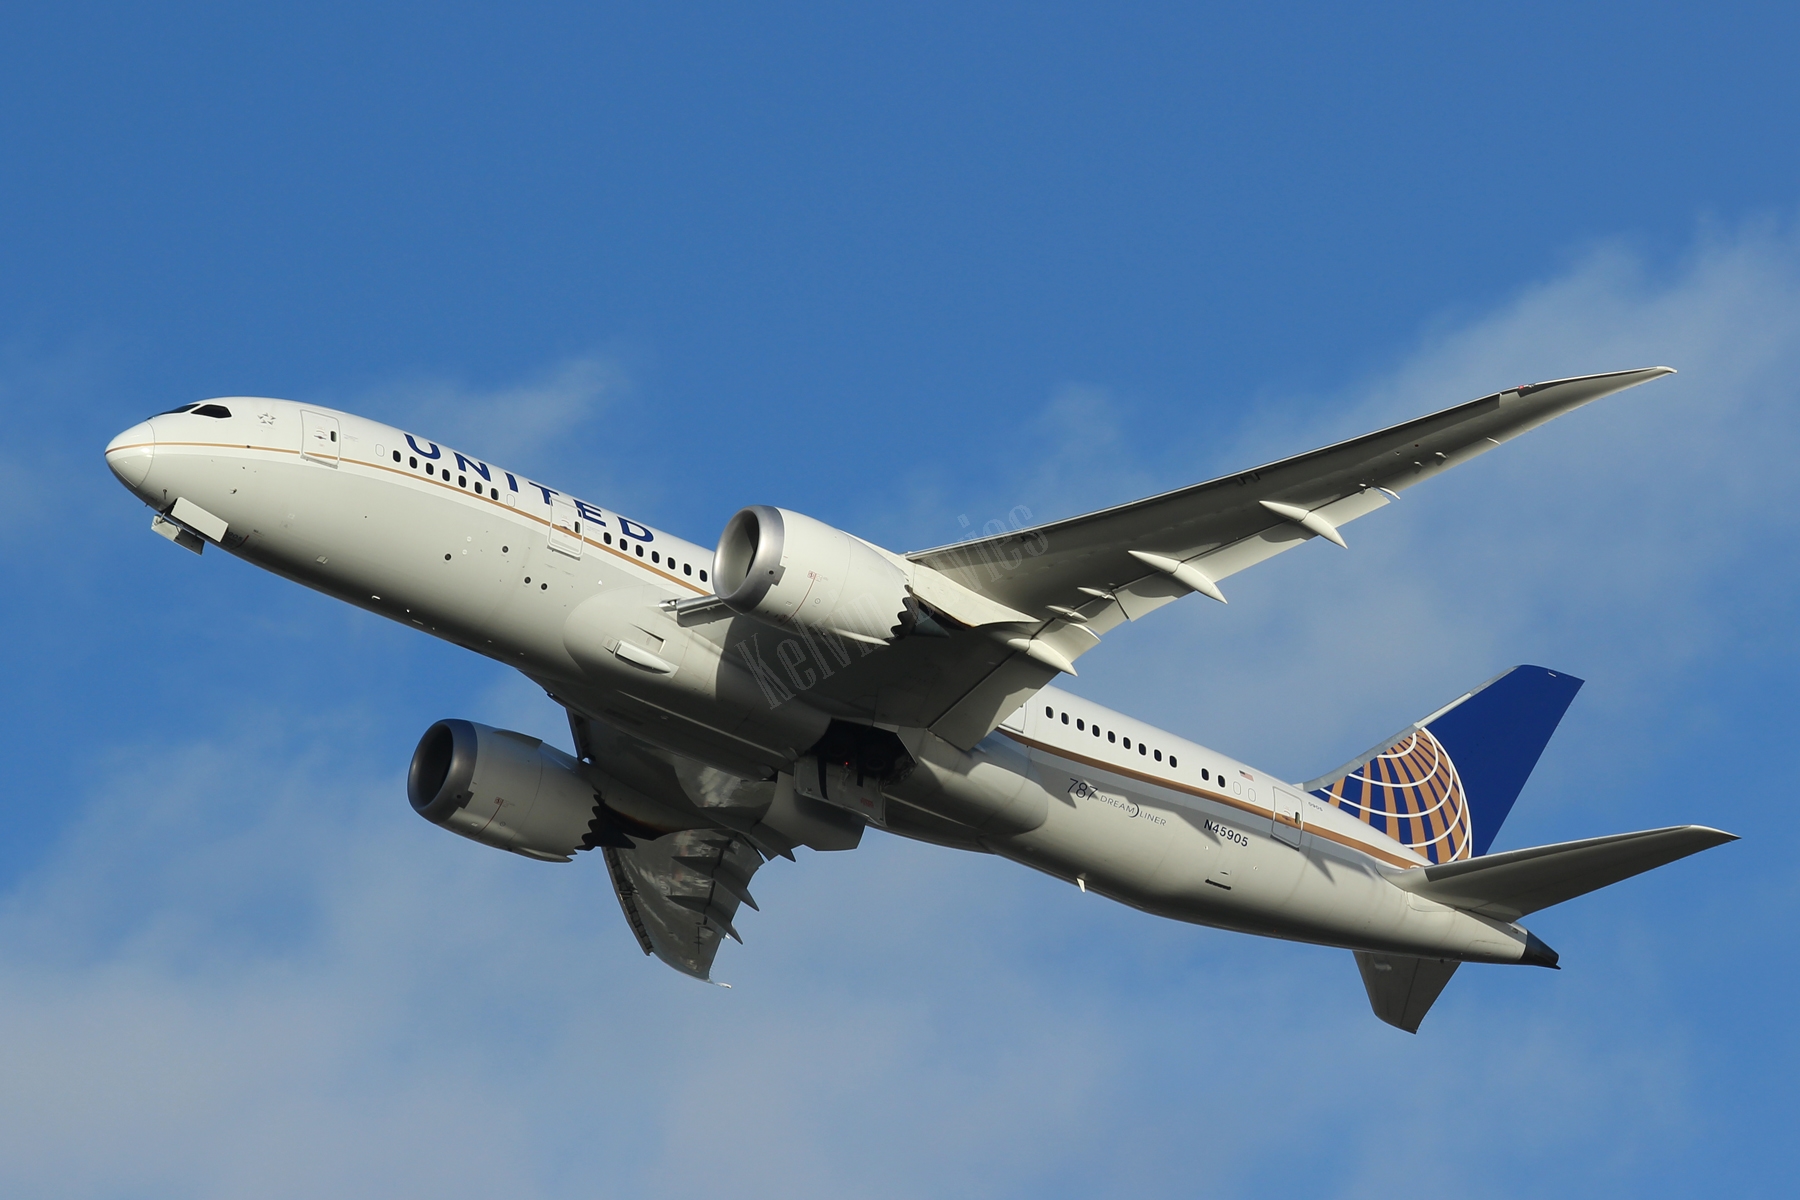 United Airlines 787 N45905